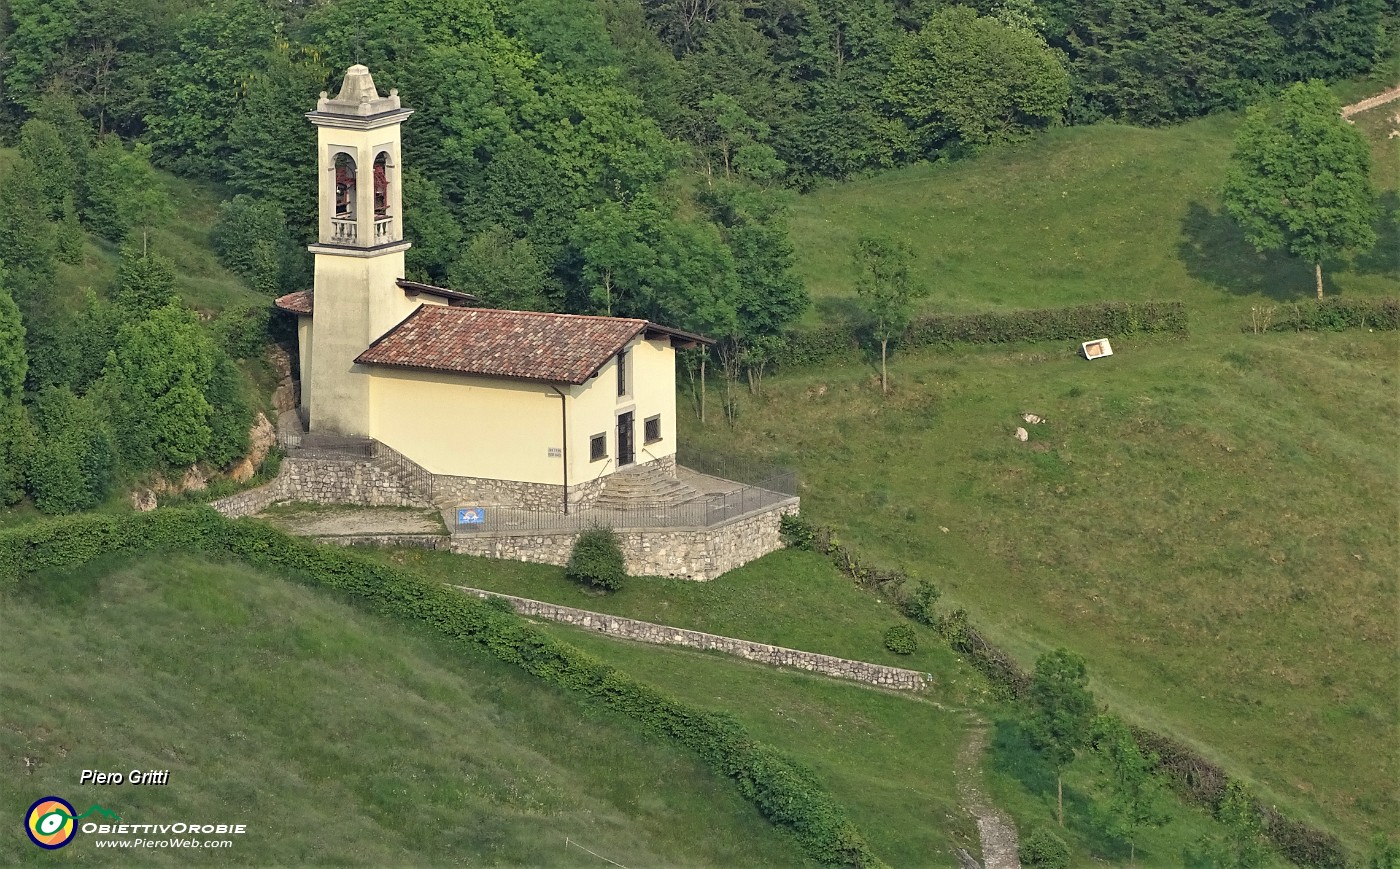 93 Chiesa di San Barnaba di Salmezza.JPG